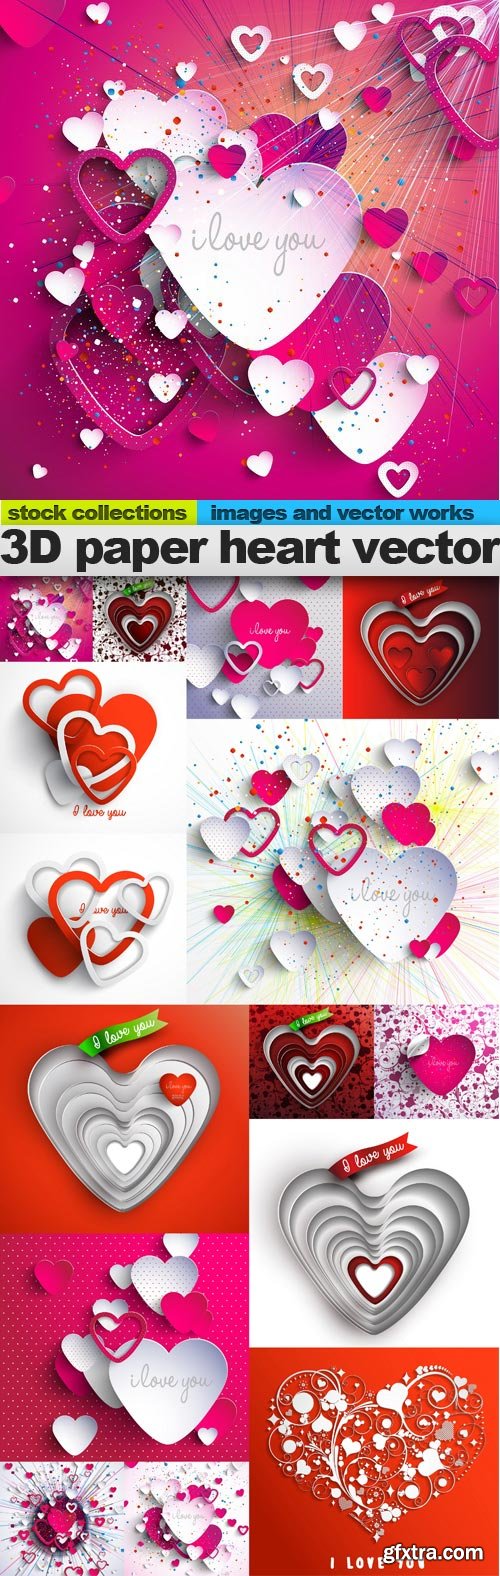 3D paper heart vector, 15 x EPS